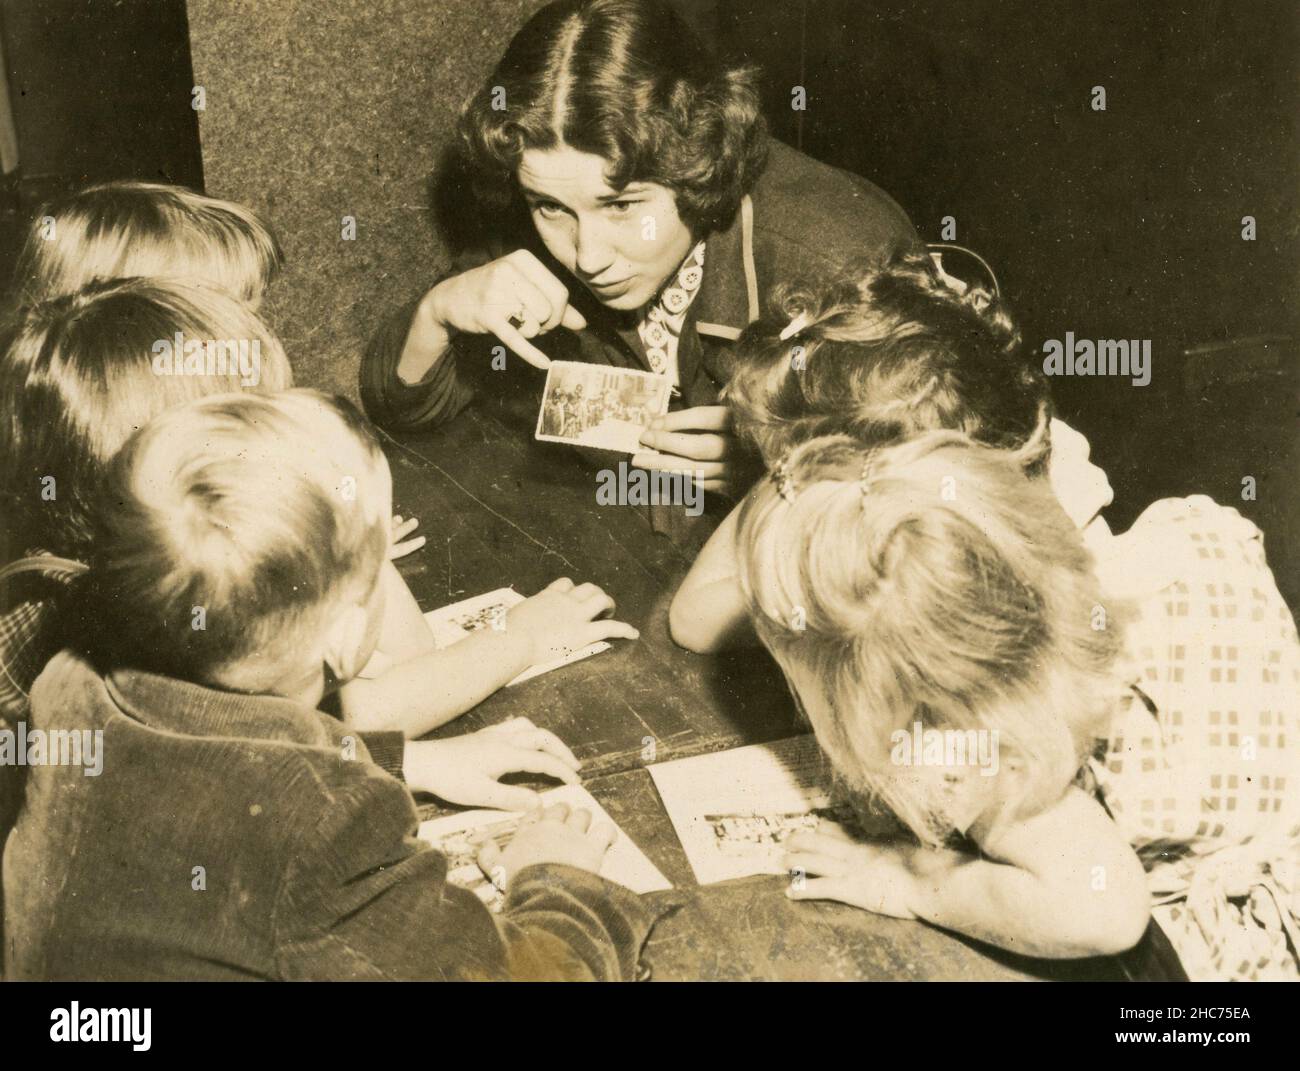 A Teacher Explains the Photo to the Pupils at a Nursery School, USA 1940s Stock Photo